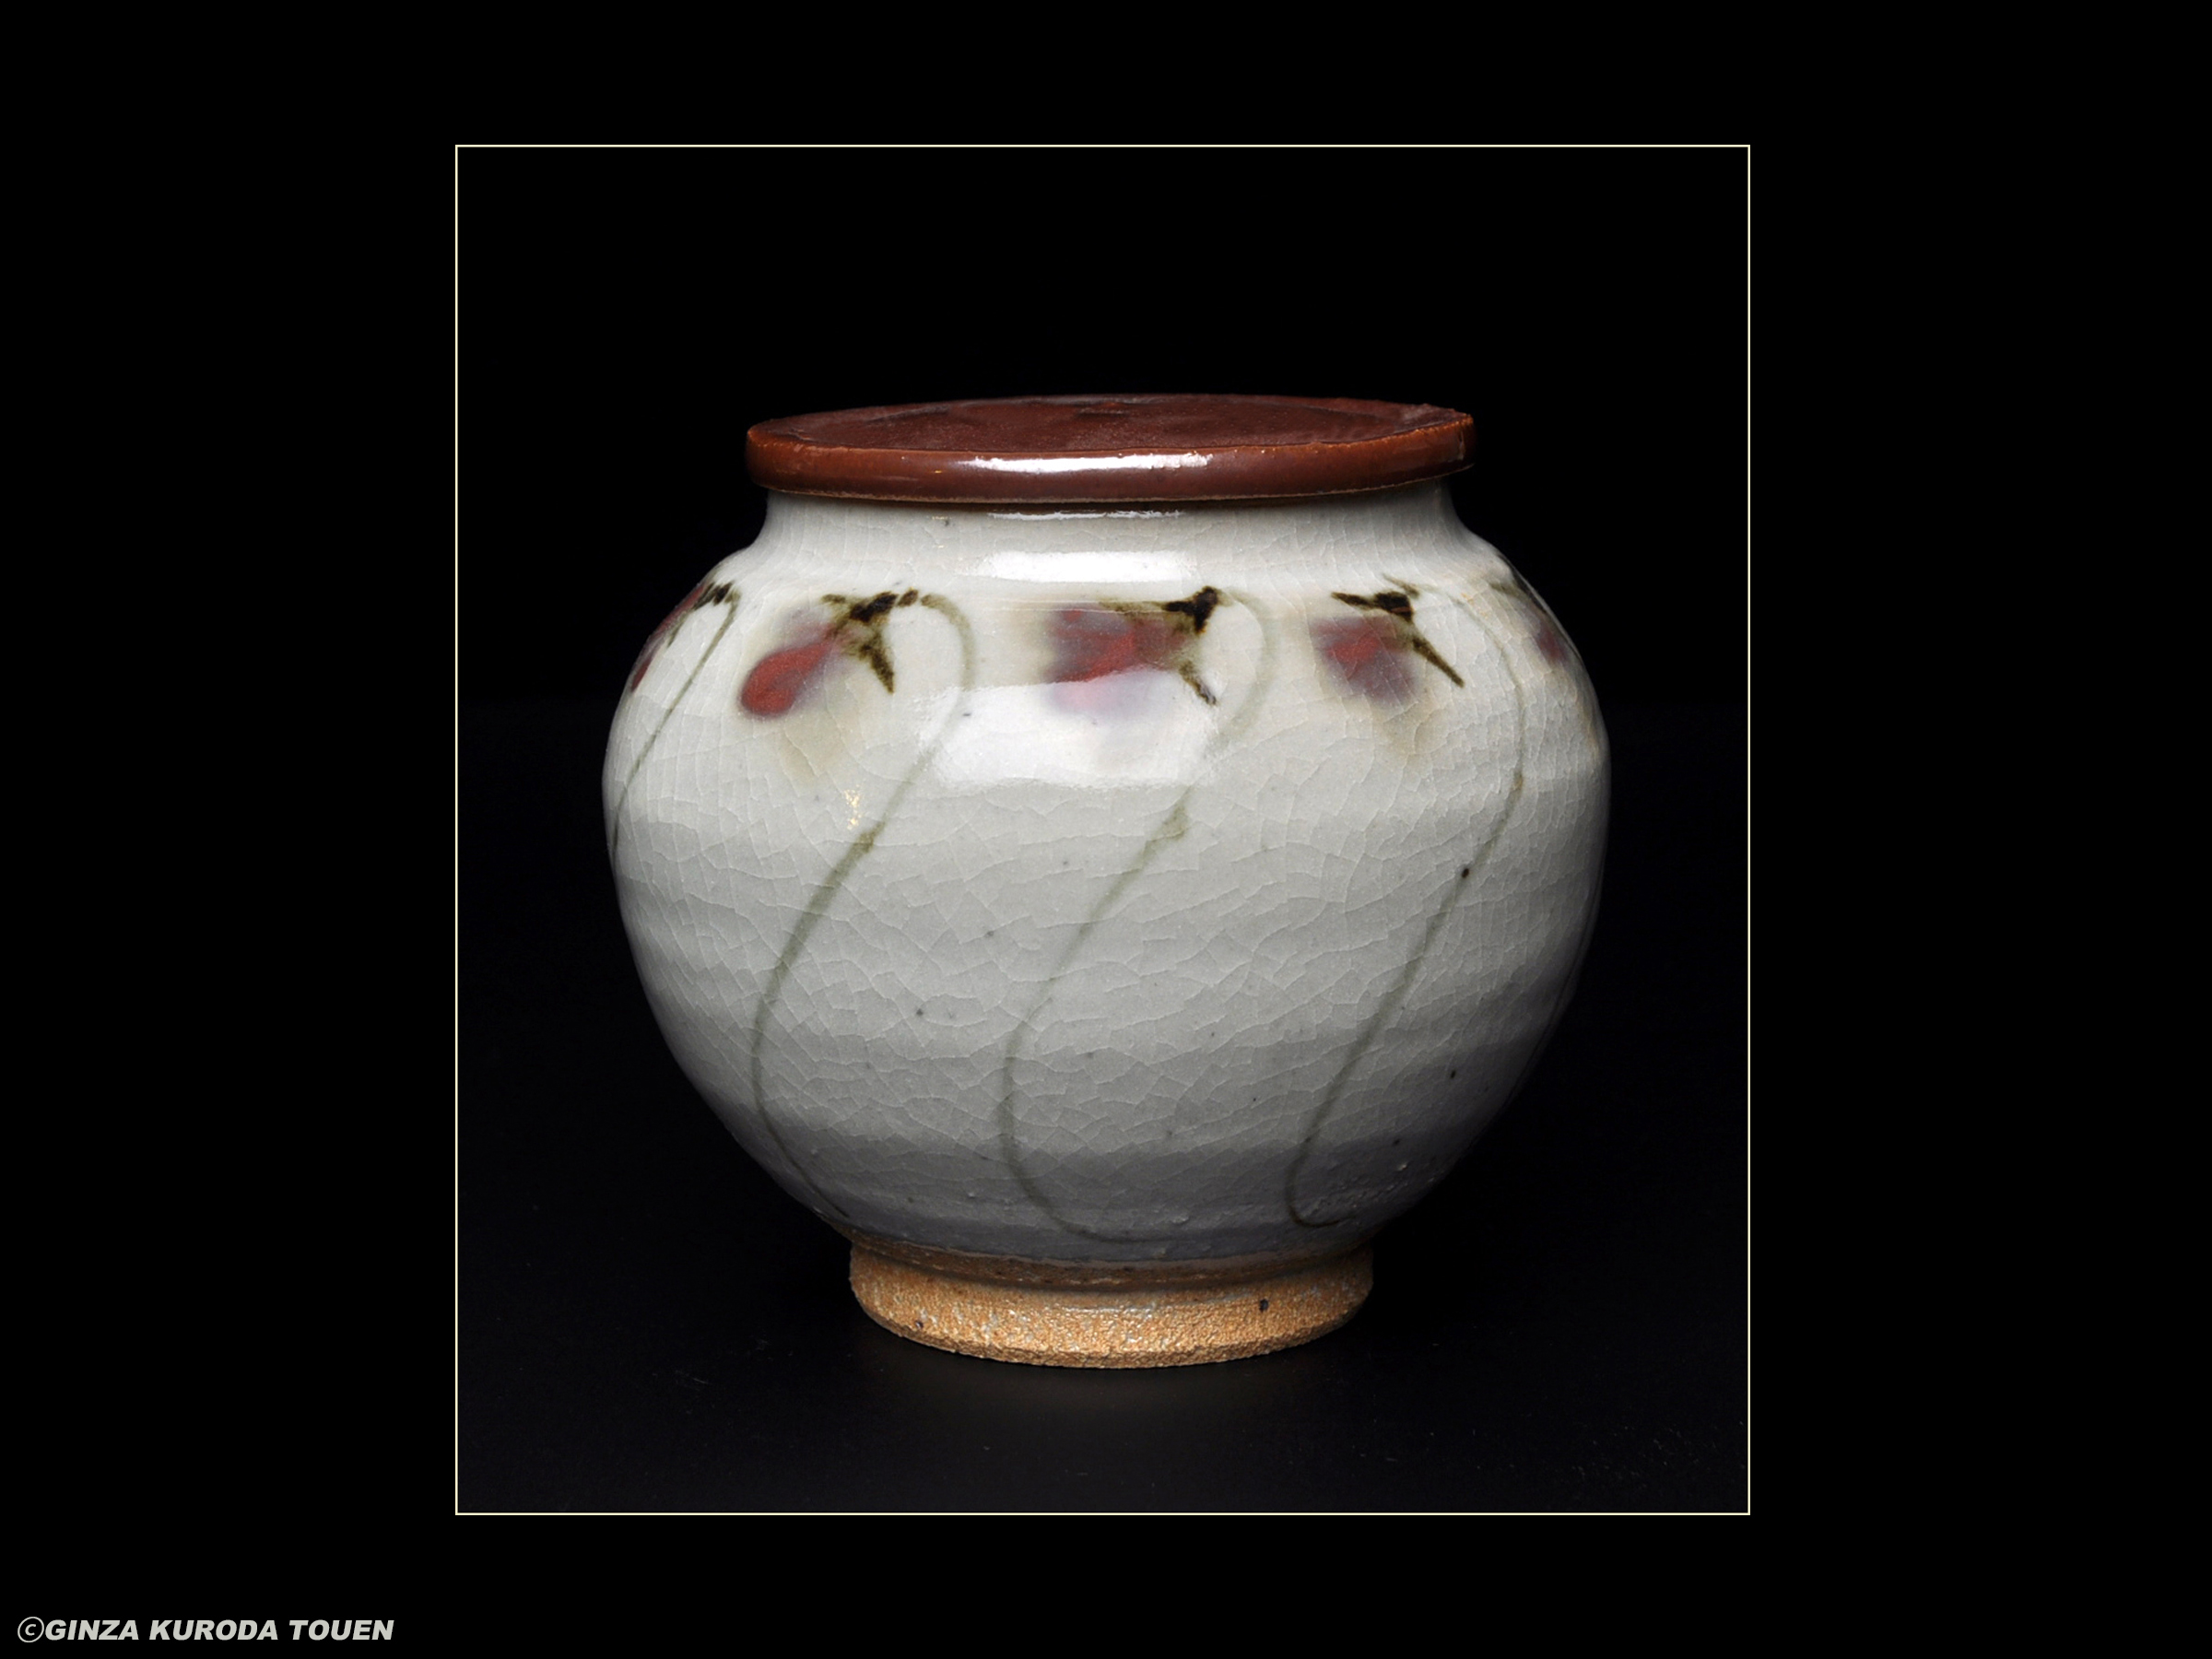 Koichi Tamra: Small jar, flower design